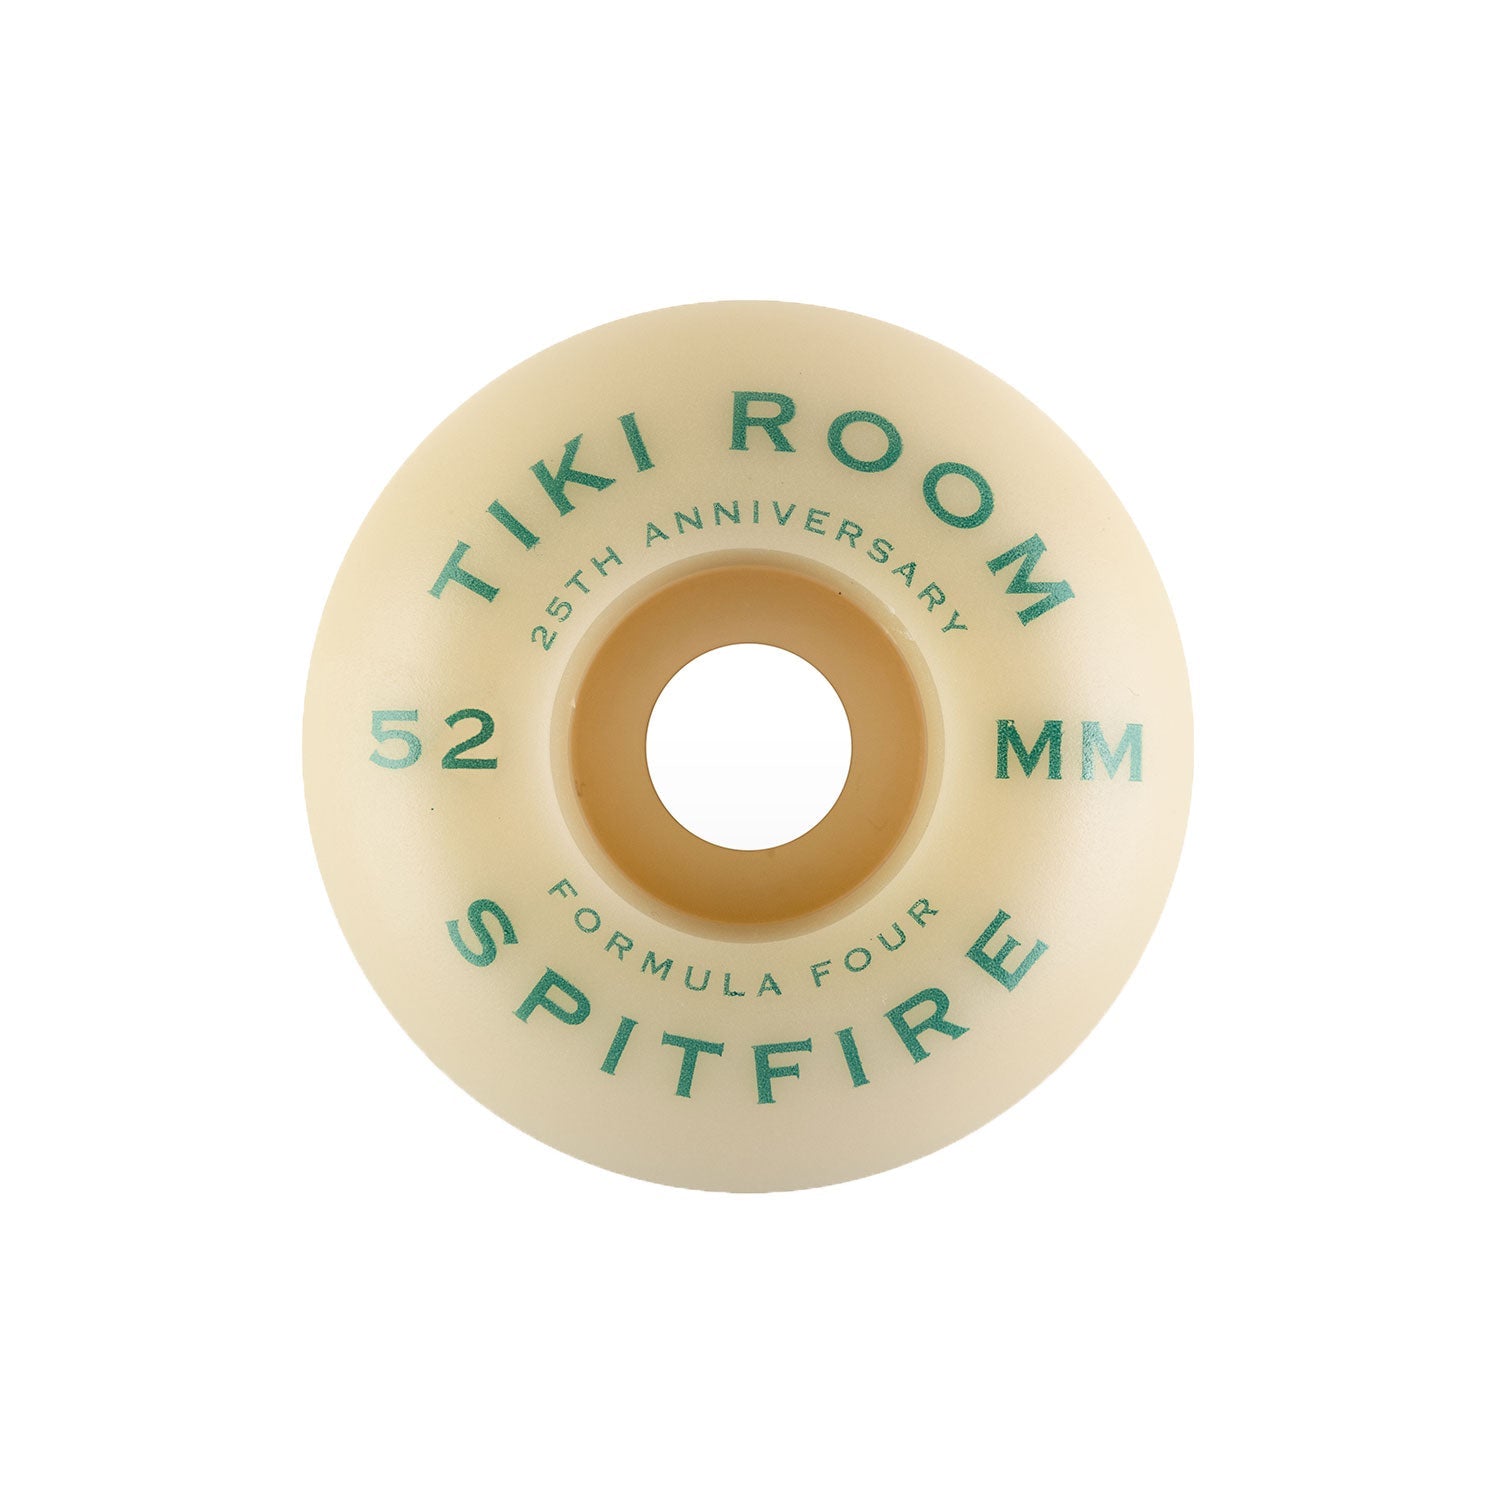 Spitfire Formula Four 99 Tiki Room 25th Anniversary classic wheel (52mm) - Tiki Room Skateboards - 2